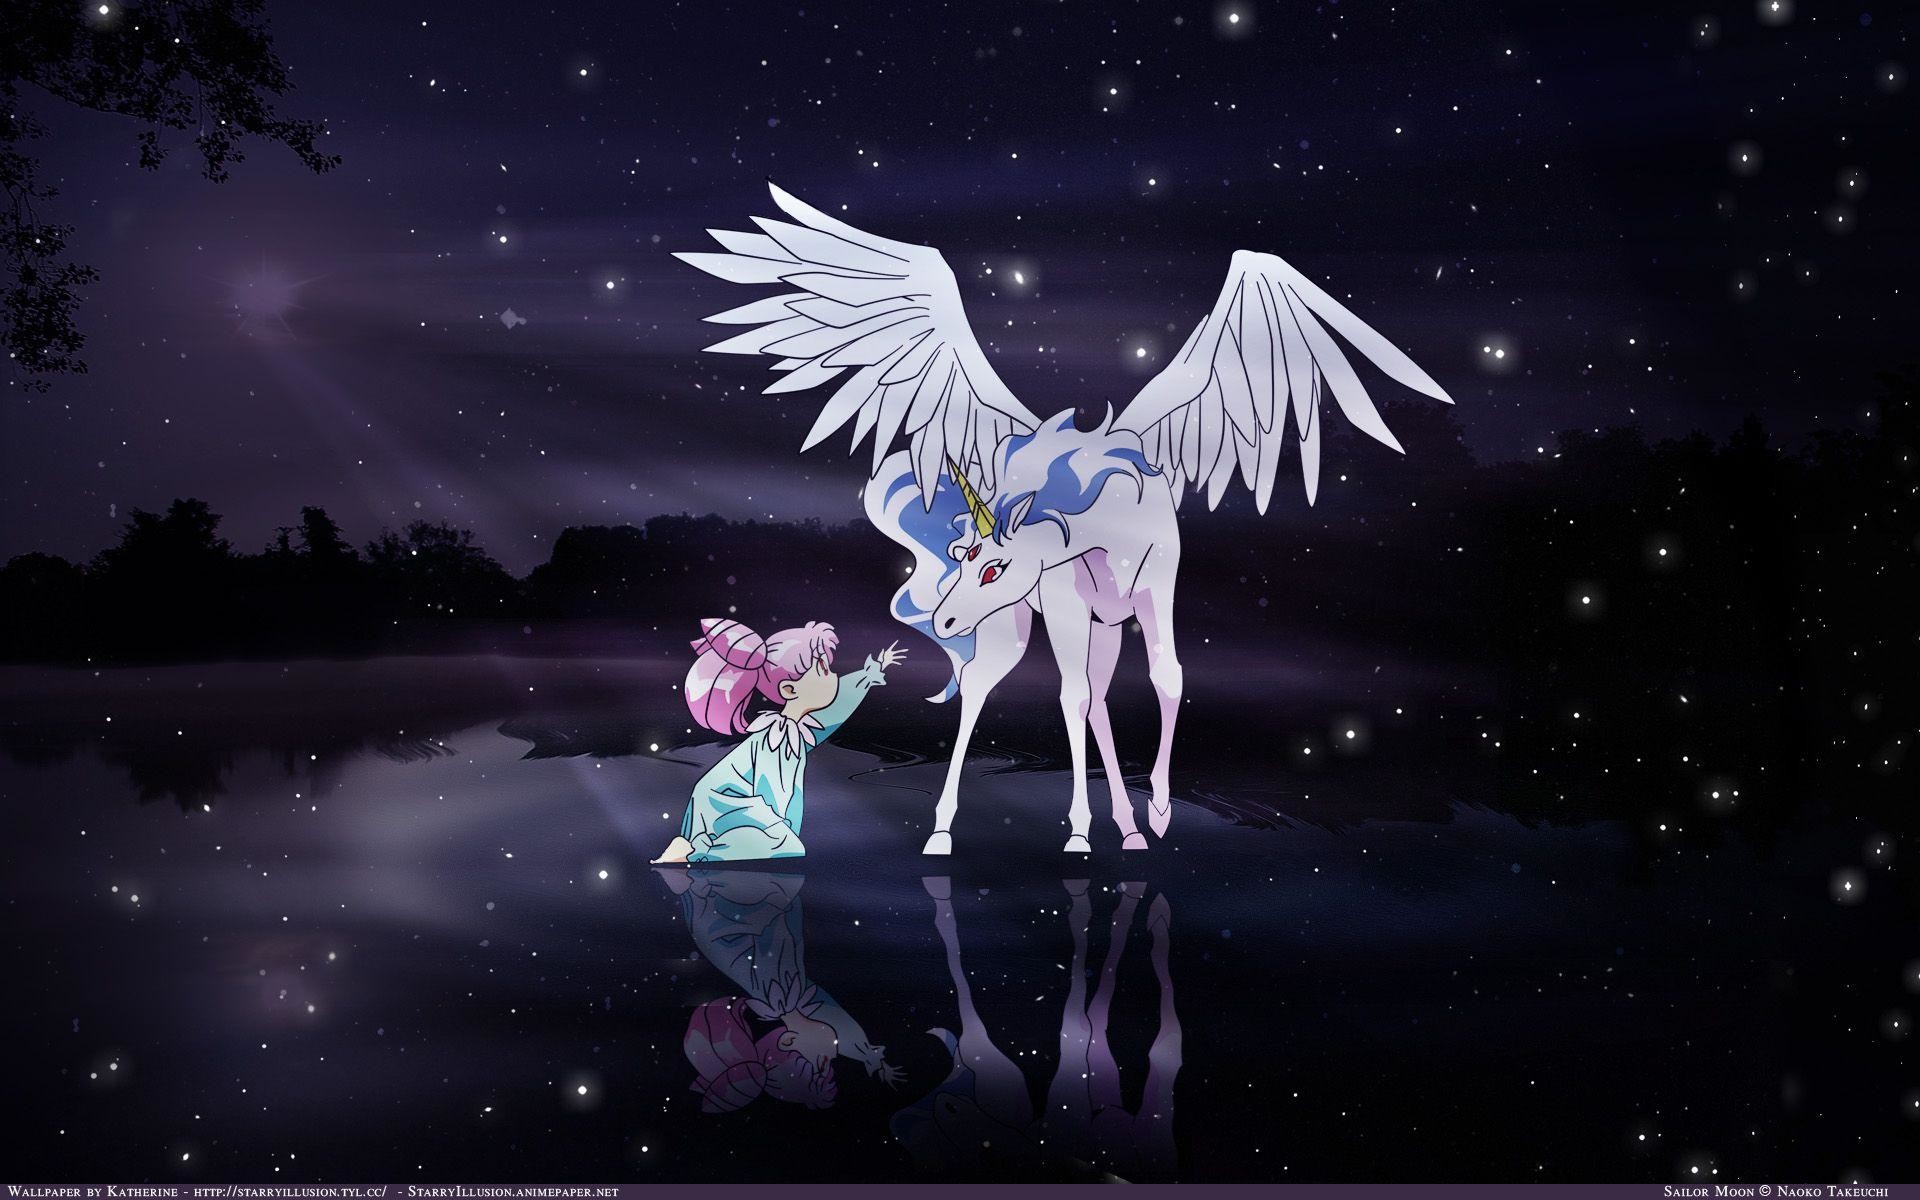 Creative Sailor Moon Wallpapers Hd Desktop Wallpaper 980x734PX